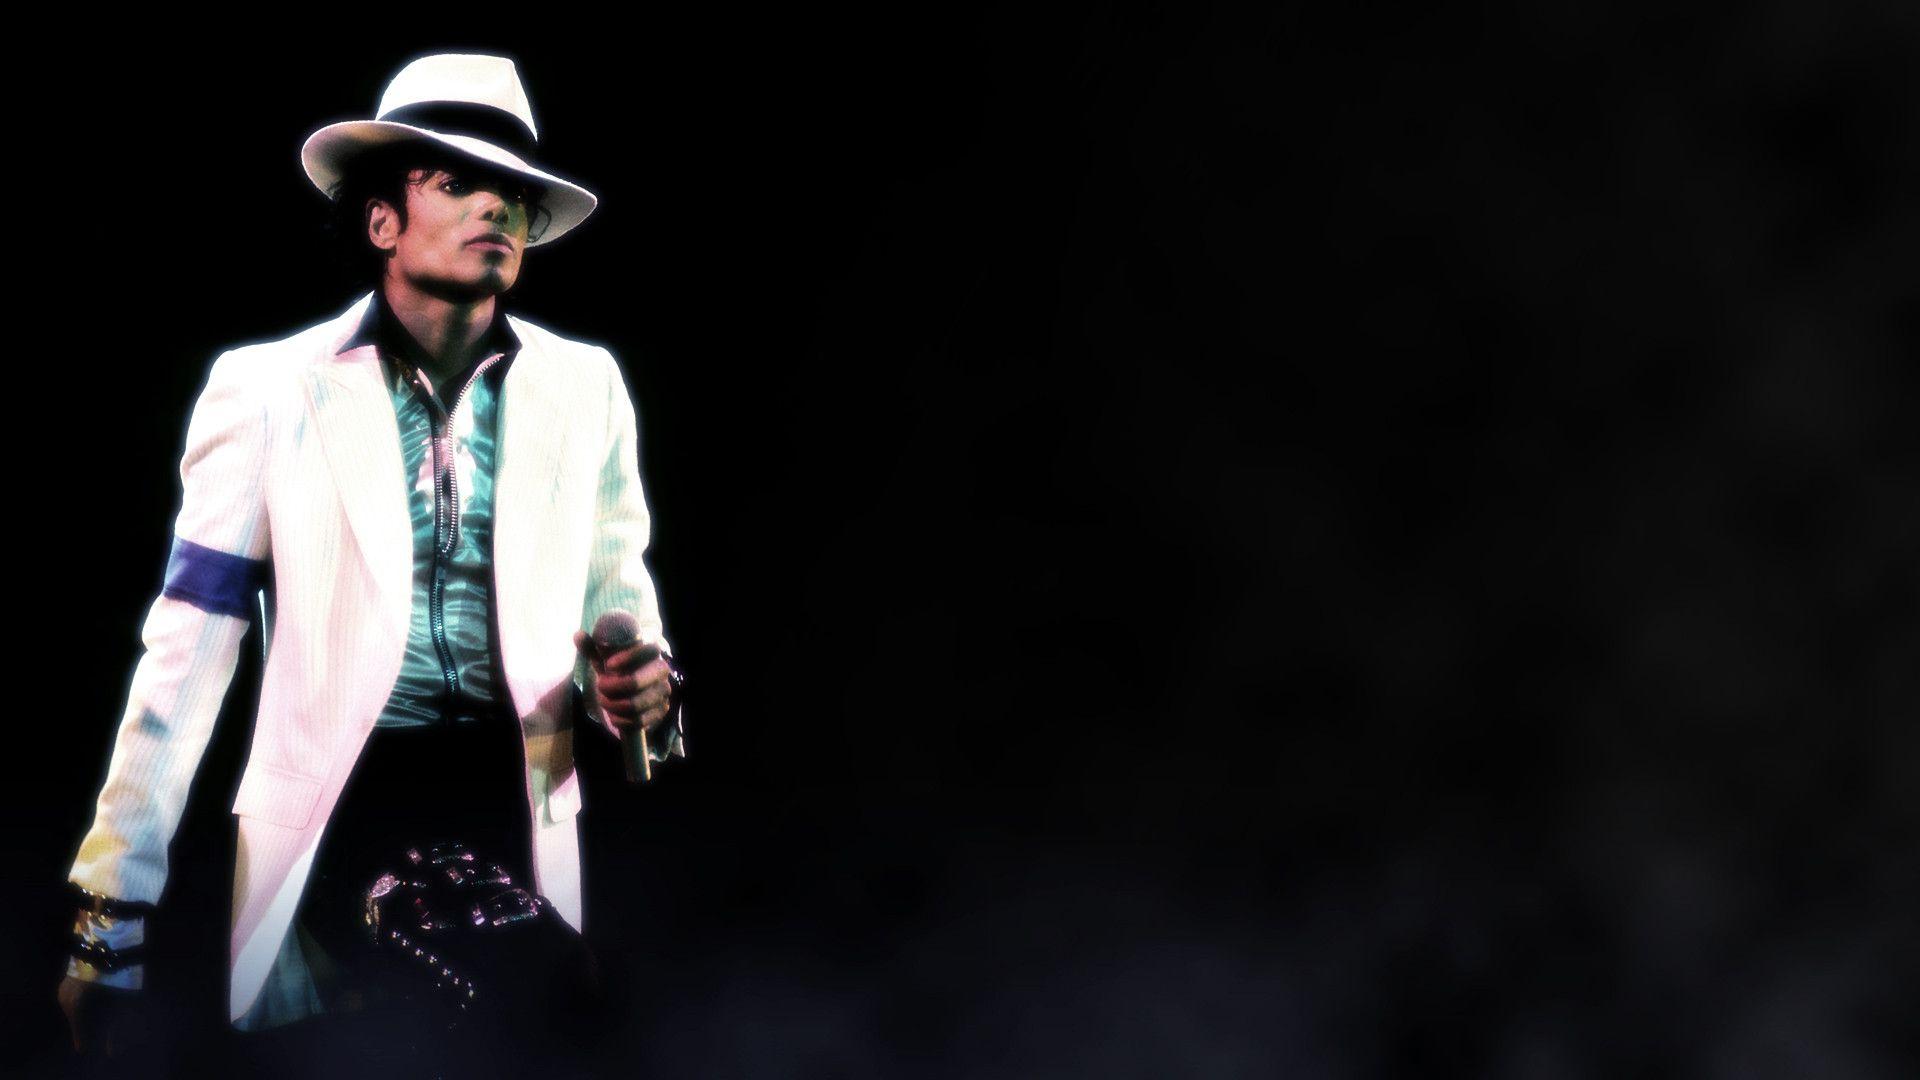 Michael Jackson Hd Wallpapers 46421 Wallpapers